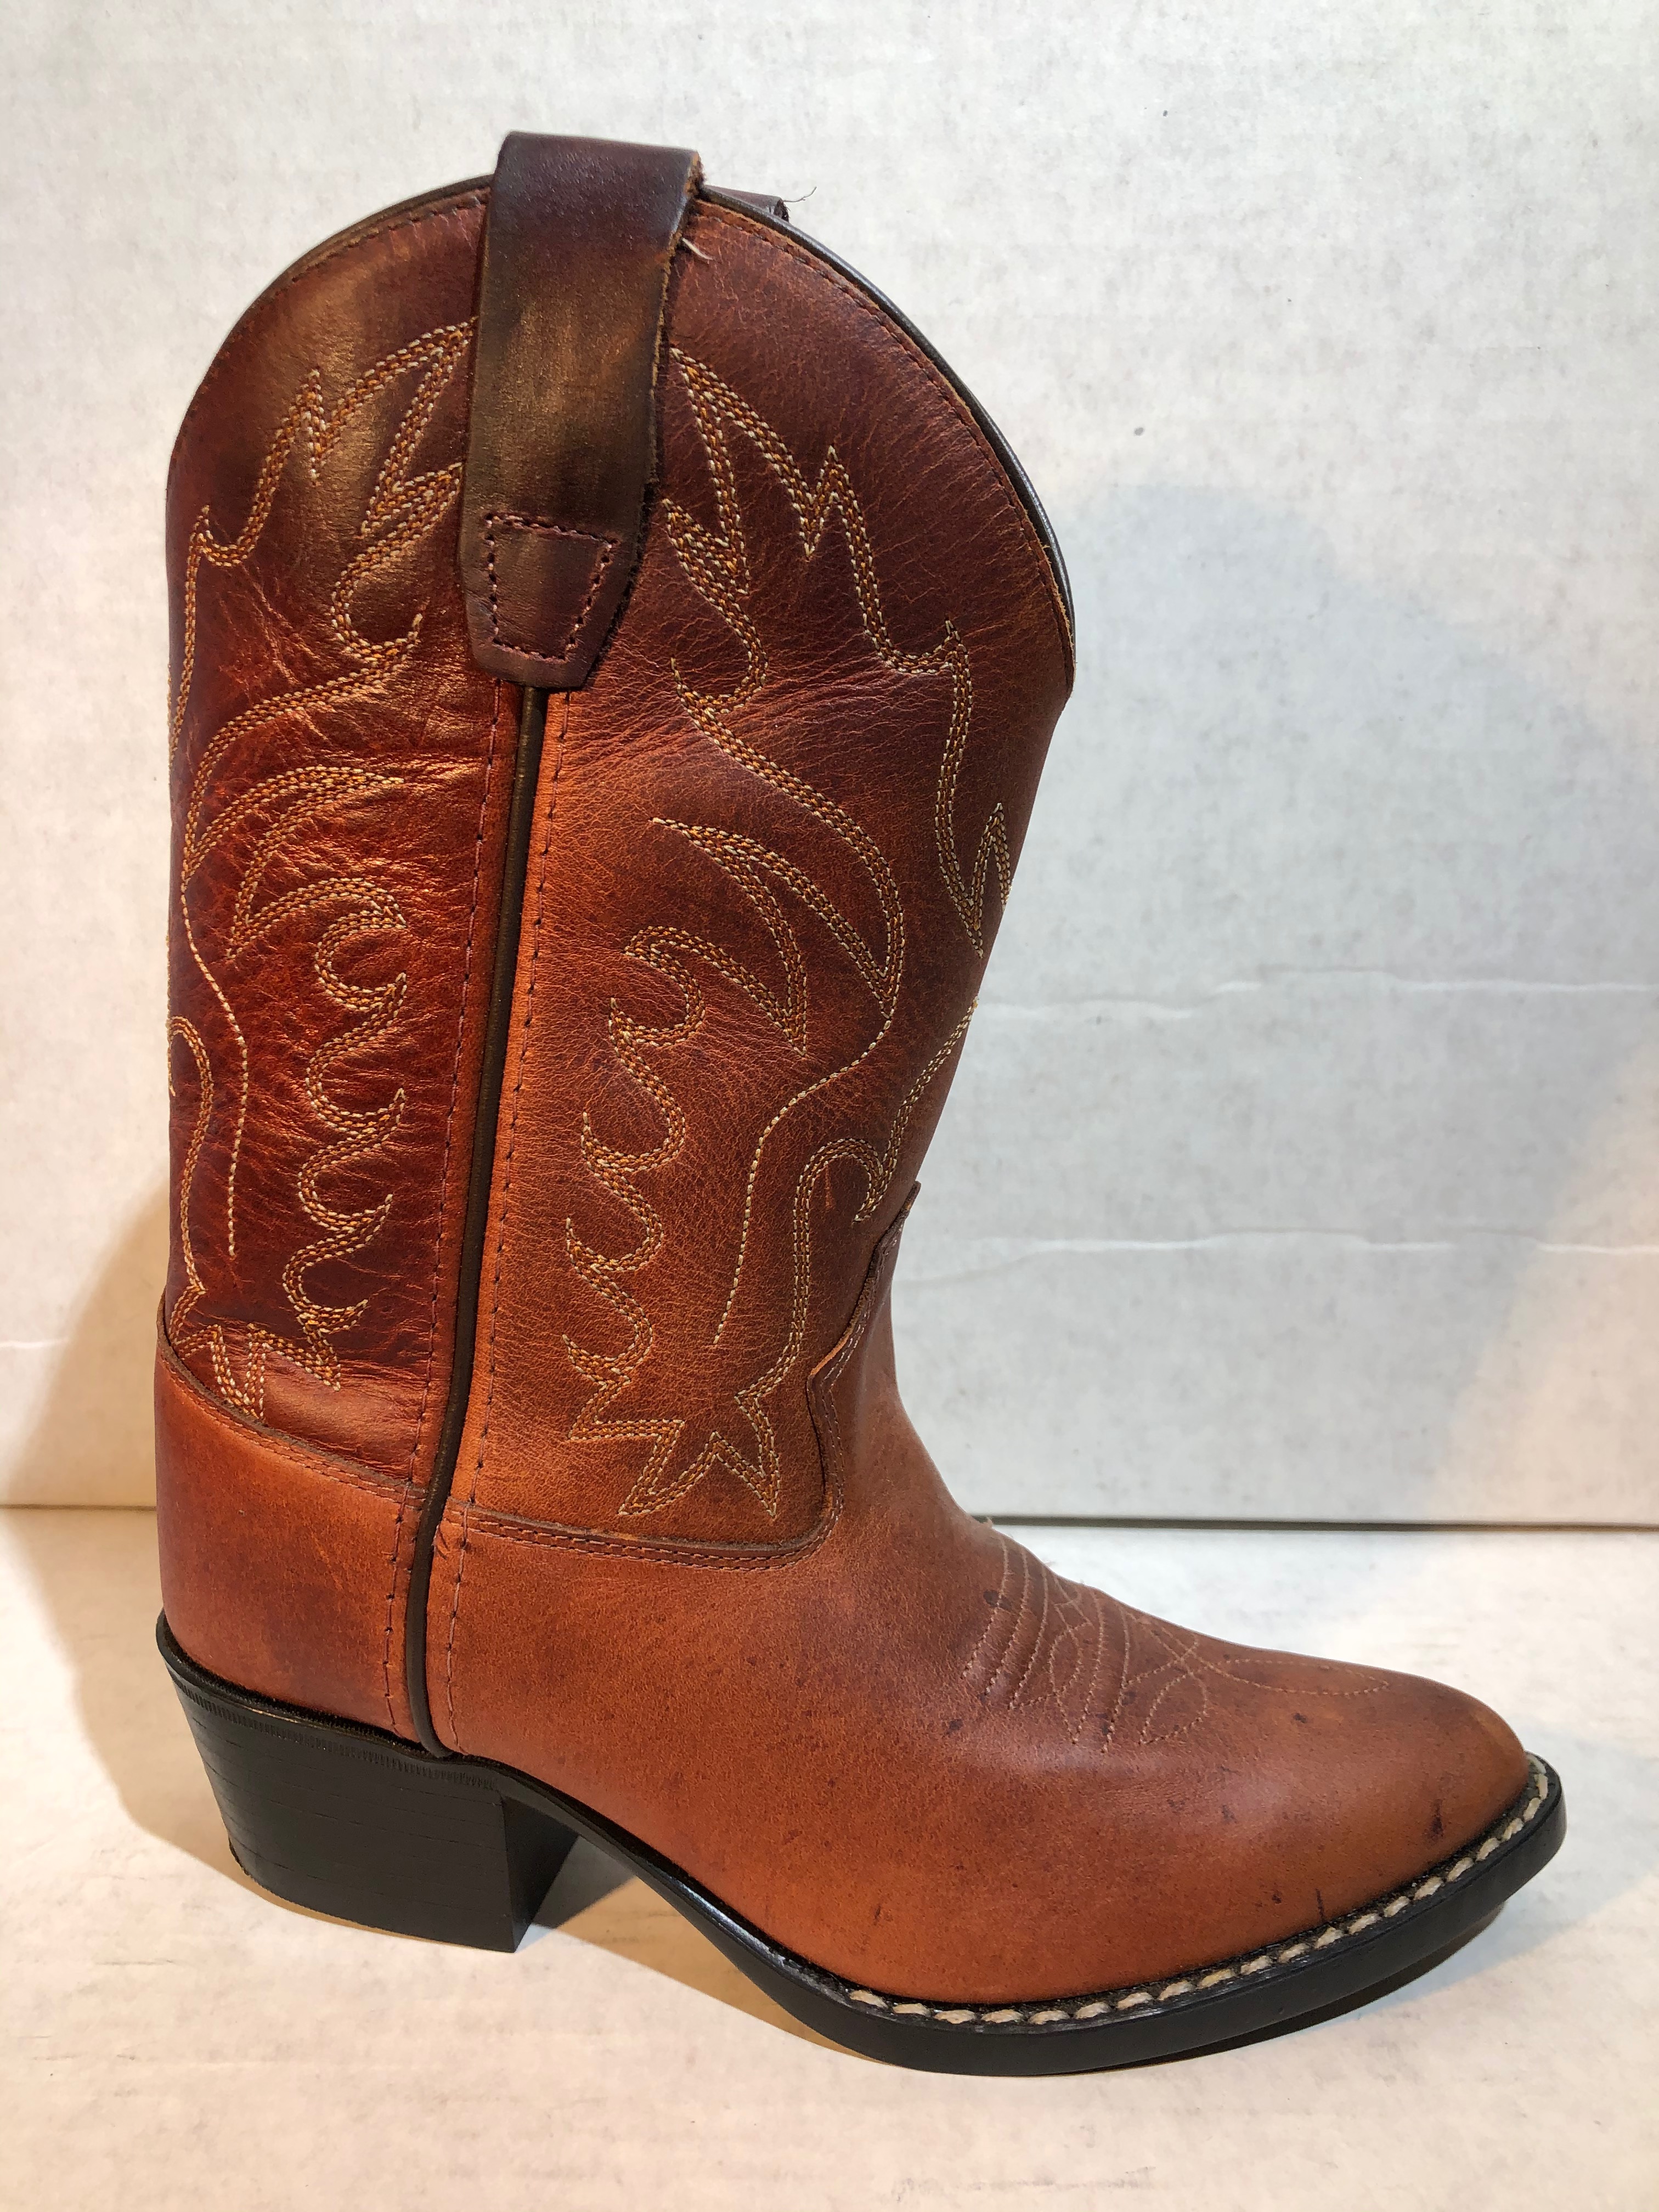 Little Kid's Old West Cowboy Boots (13.5)